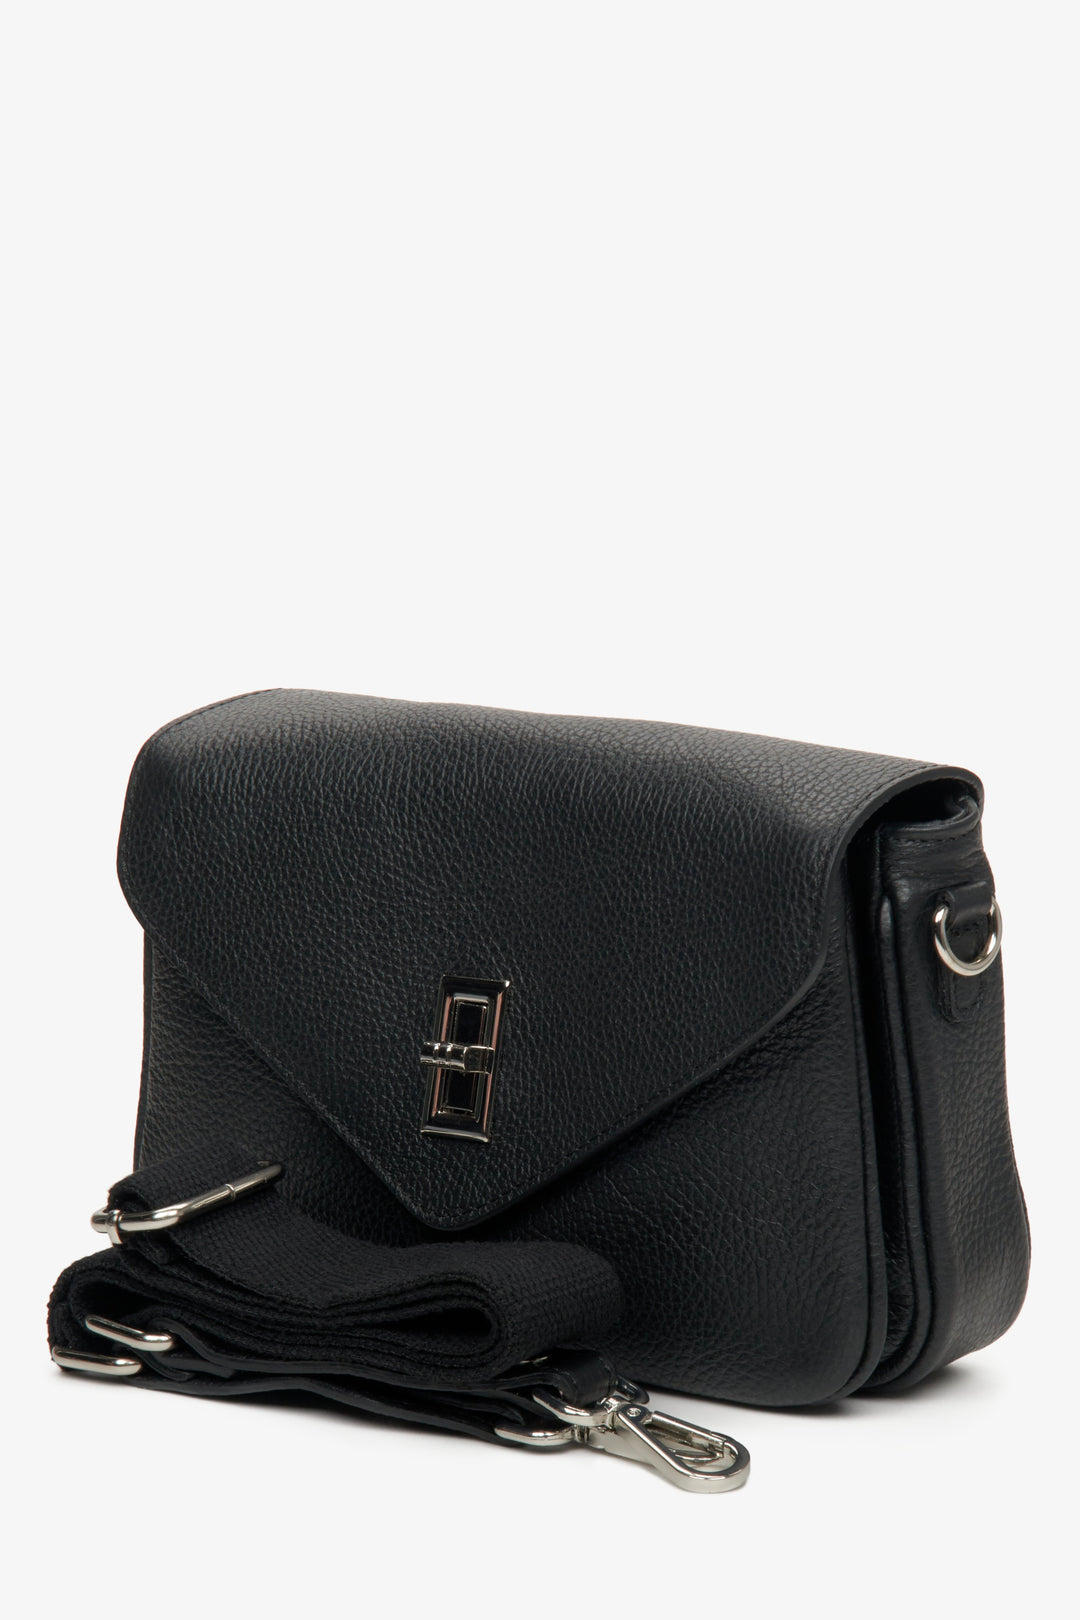 Women's black shoulder bag made of Italian natural leather Estro.